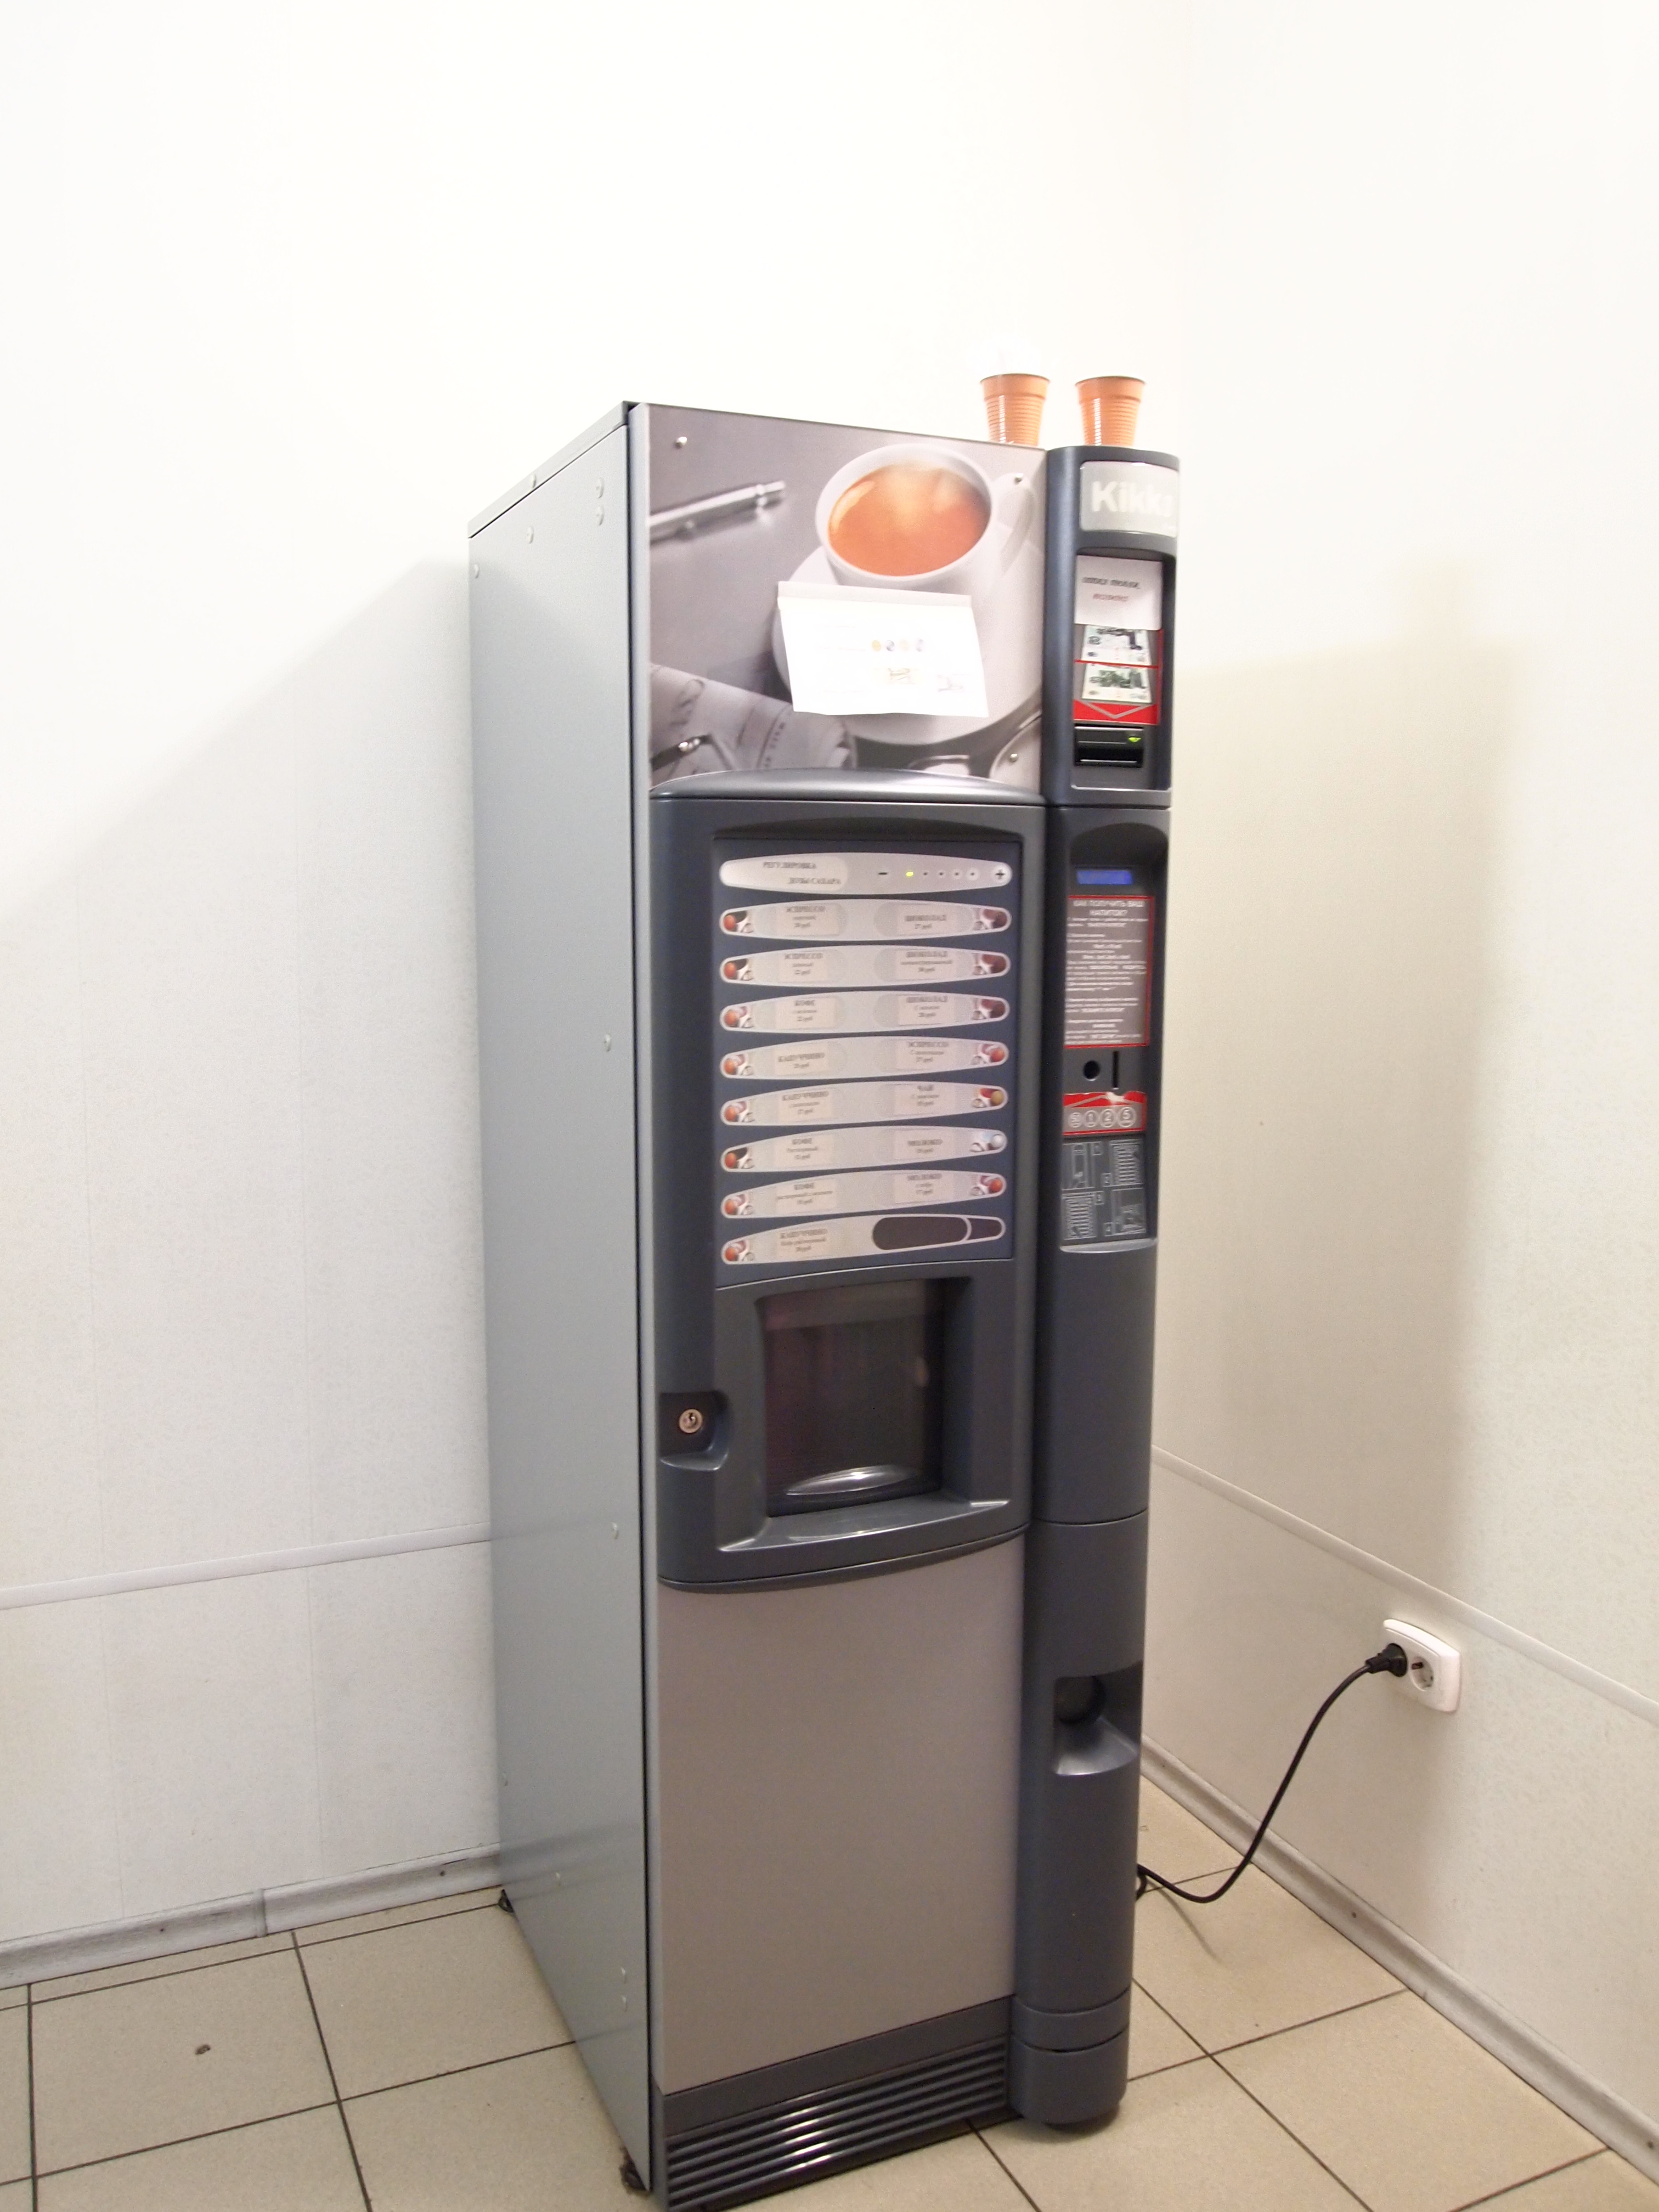 Coffee vending machine - Wikipedia